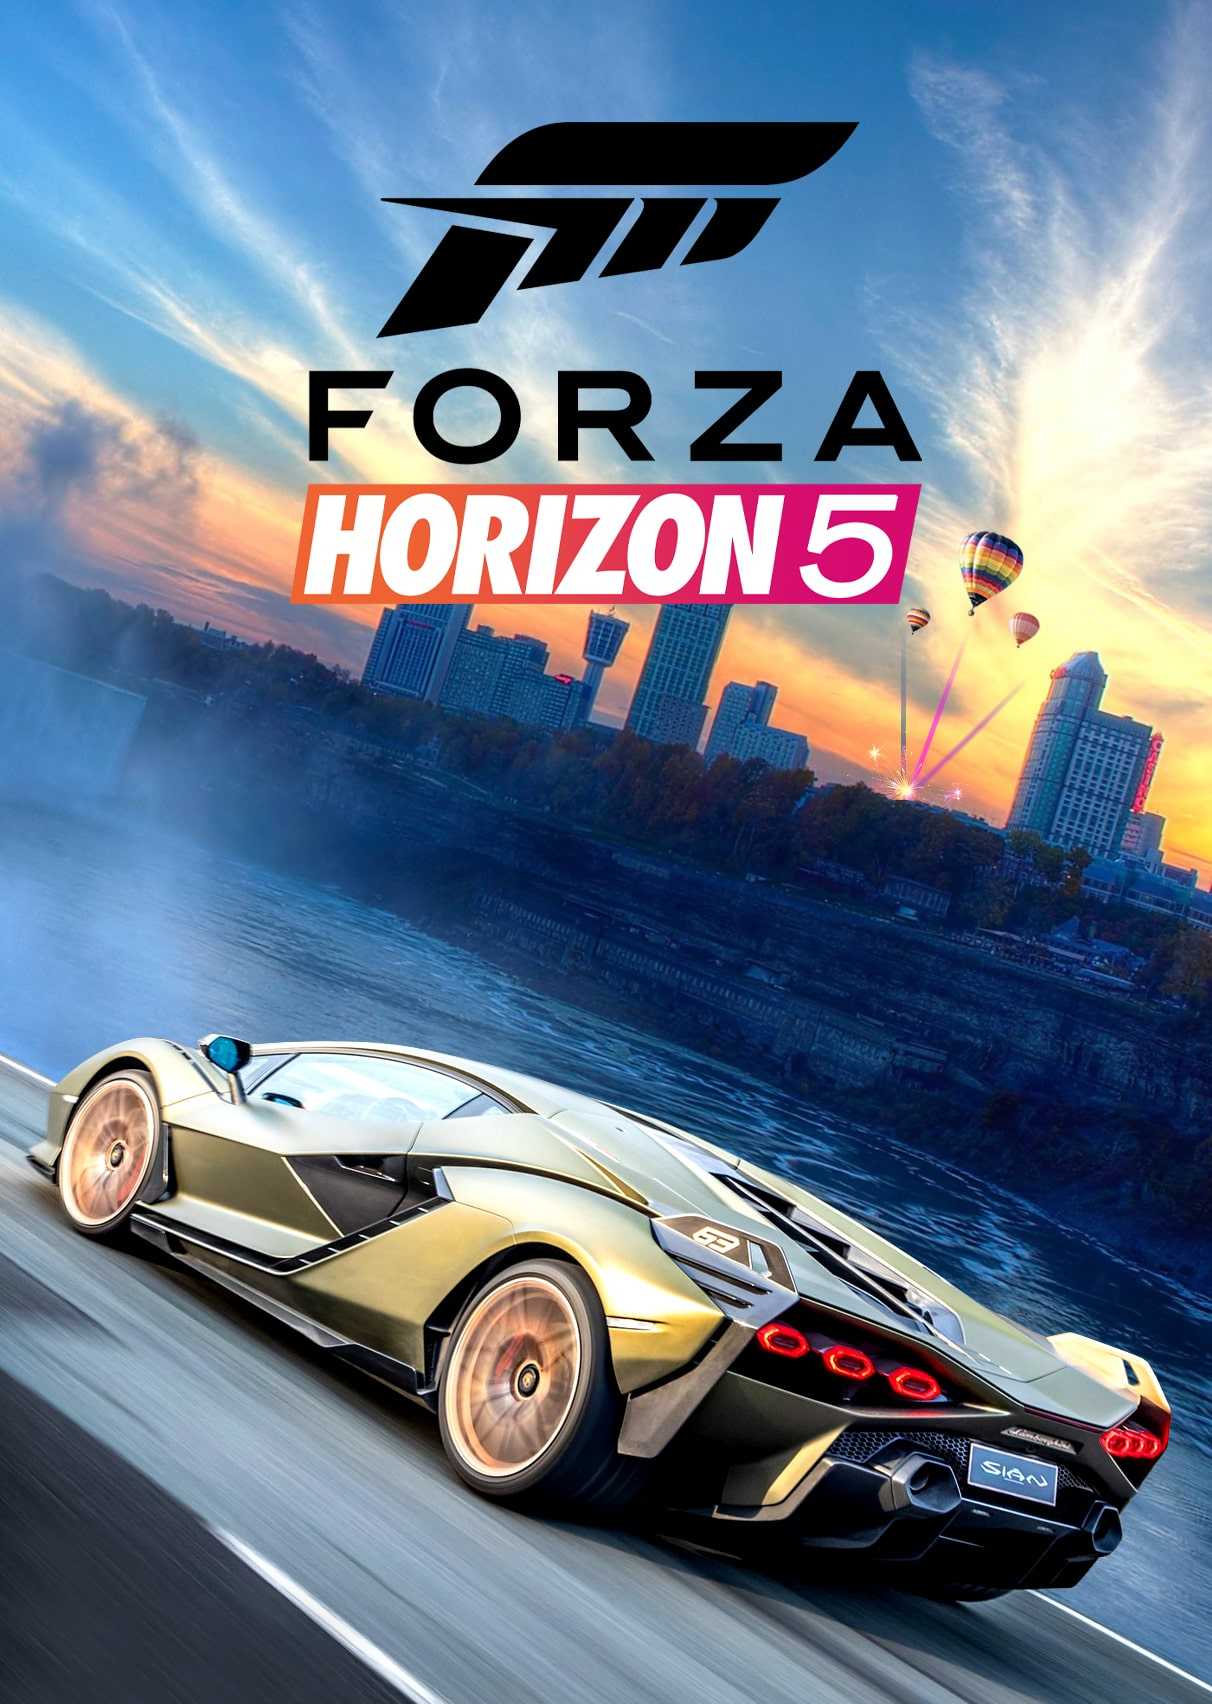 Forza Horizon 5 Wallpaper 3 